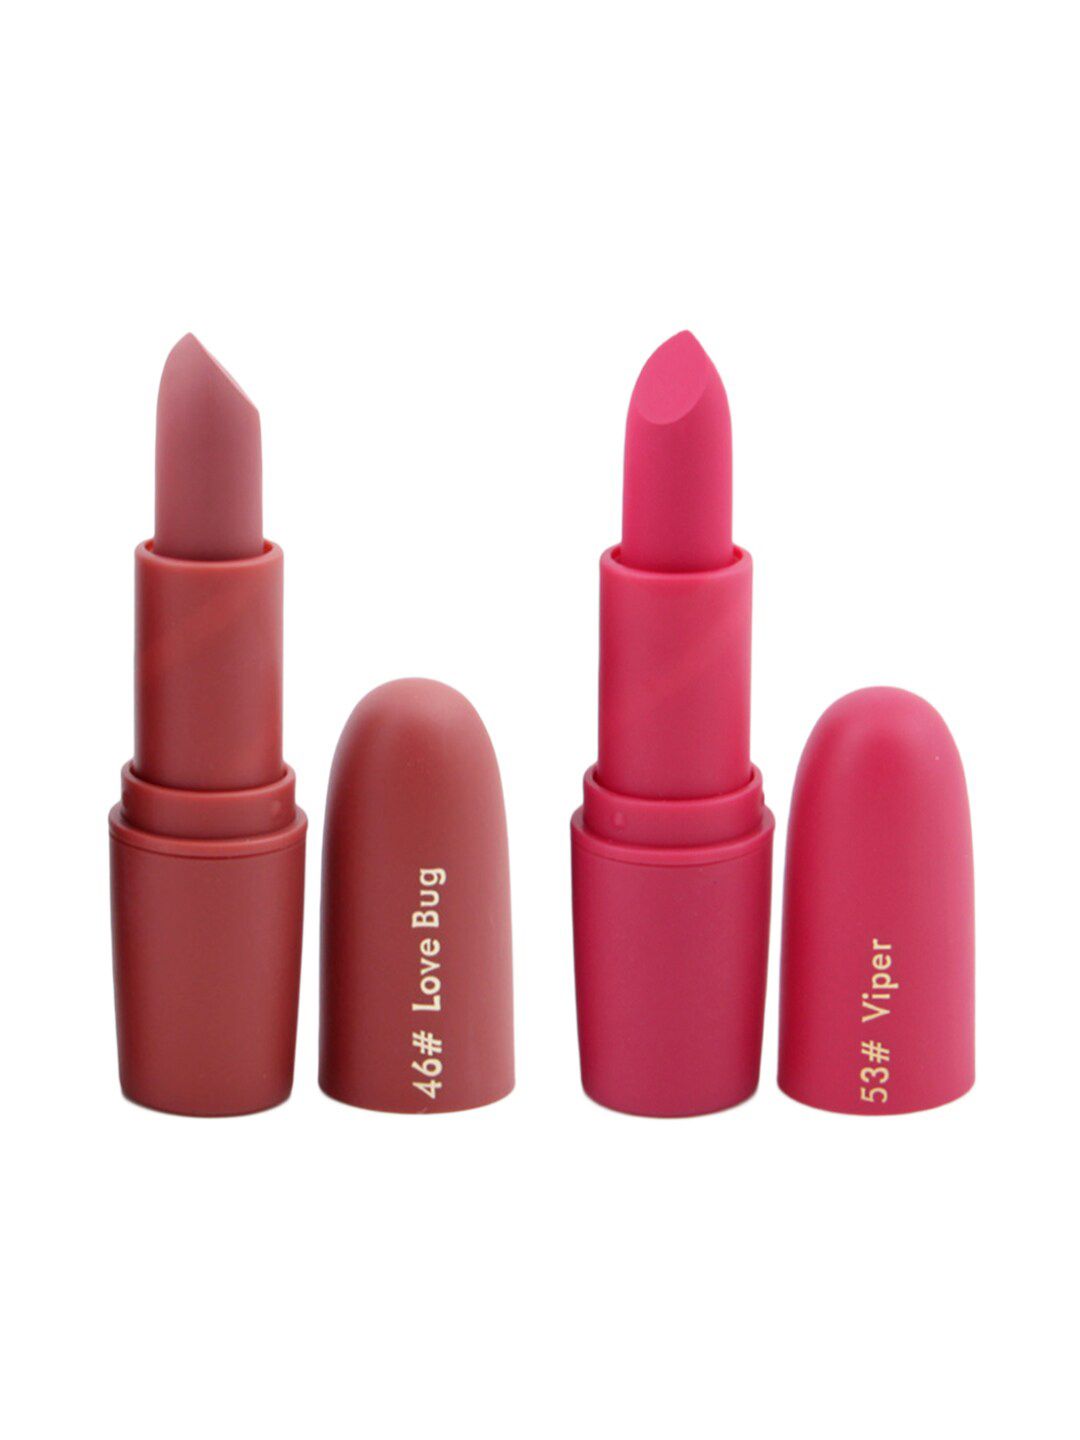 MISS ROSE Professional Make-Up Set of 2 Matte Creamy Lipsticks - Love Bug 46 & Viper 53 Price in India